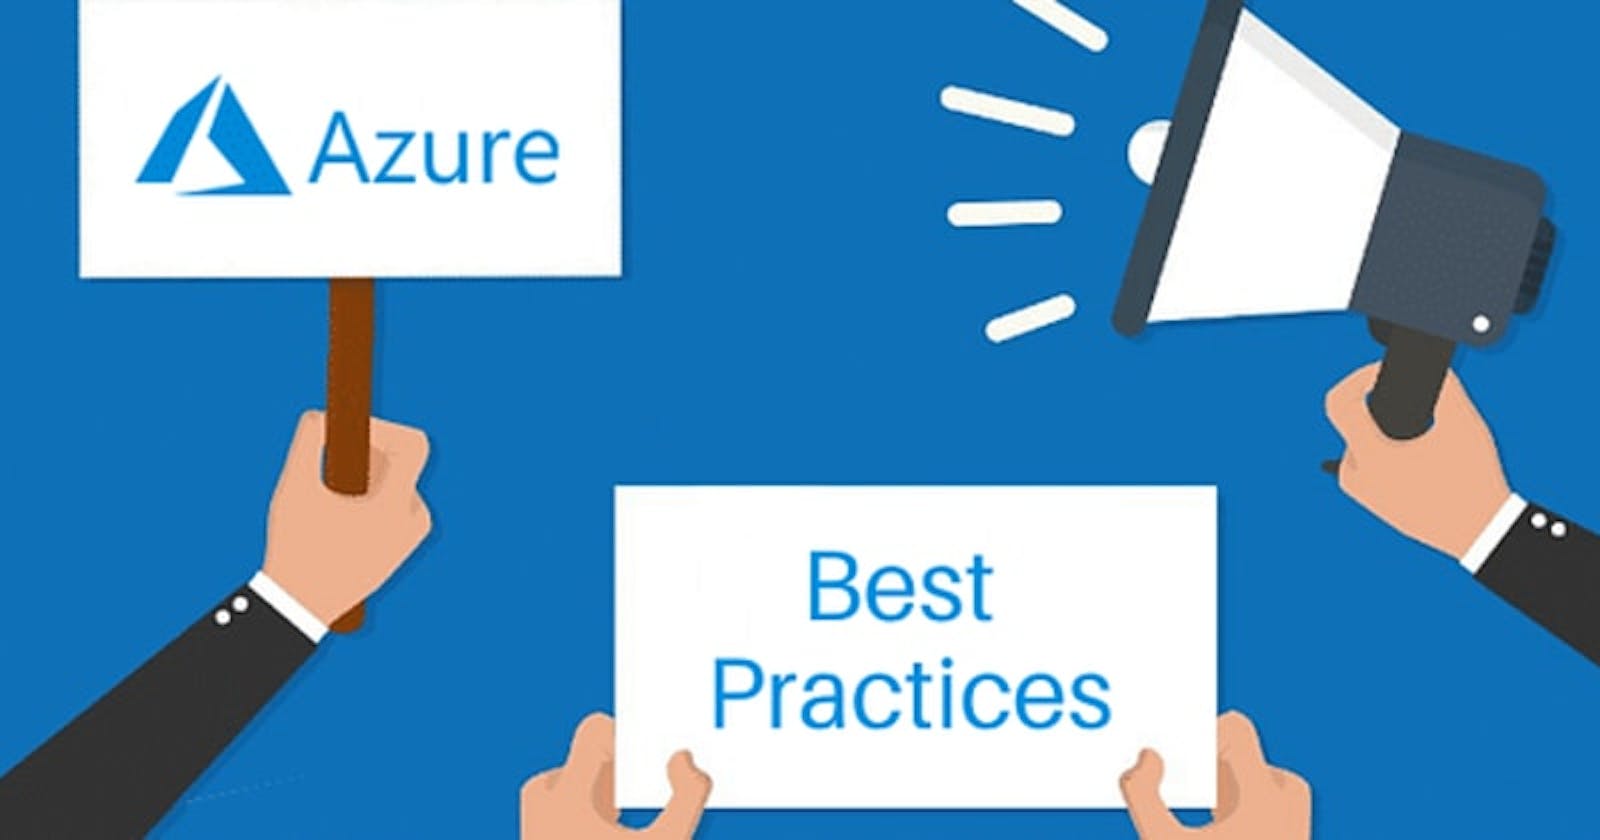 A comprehensive list of Azure Best Practices